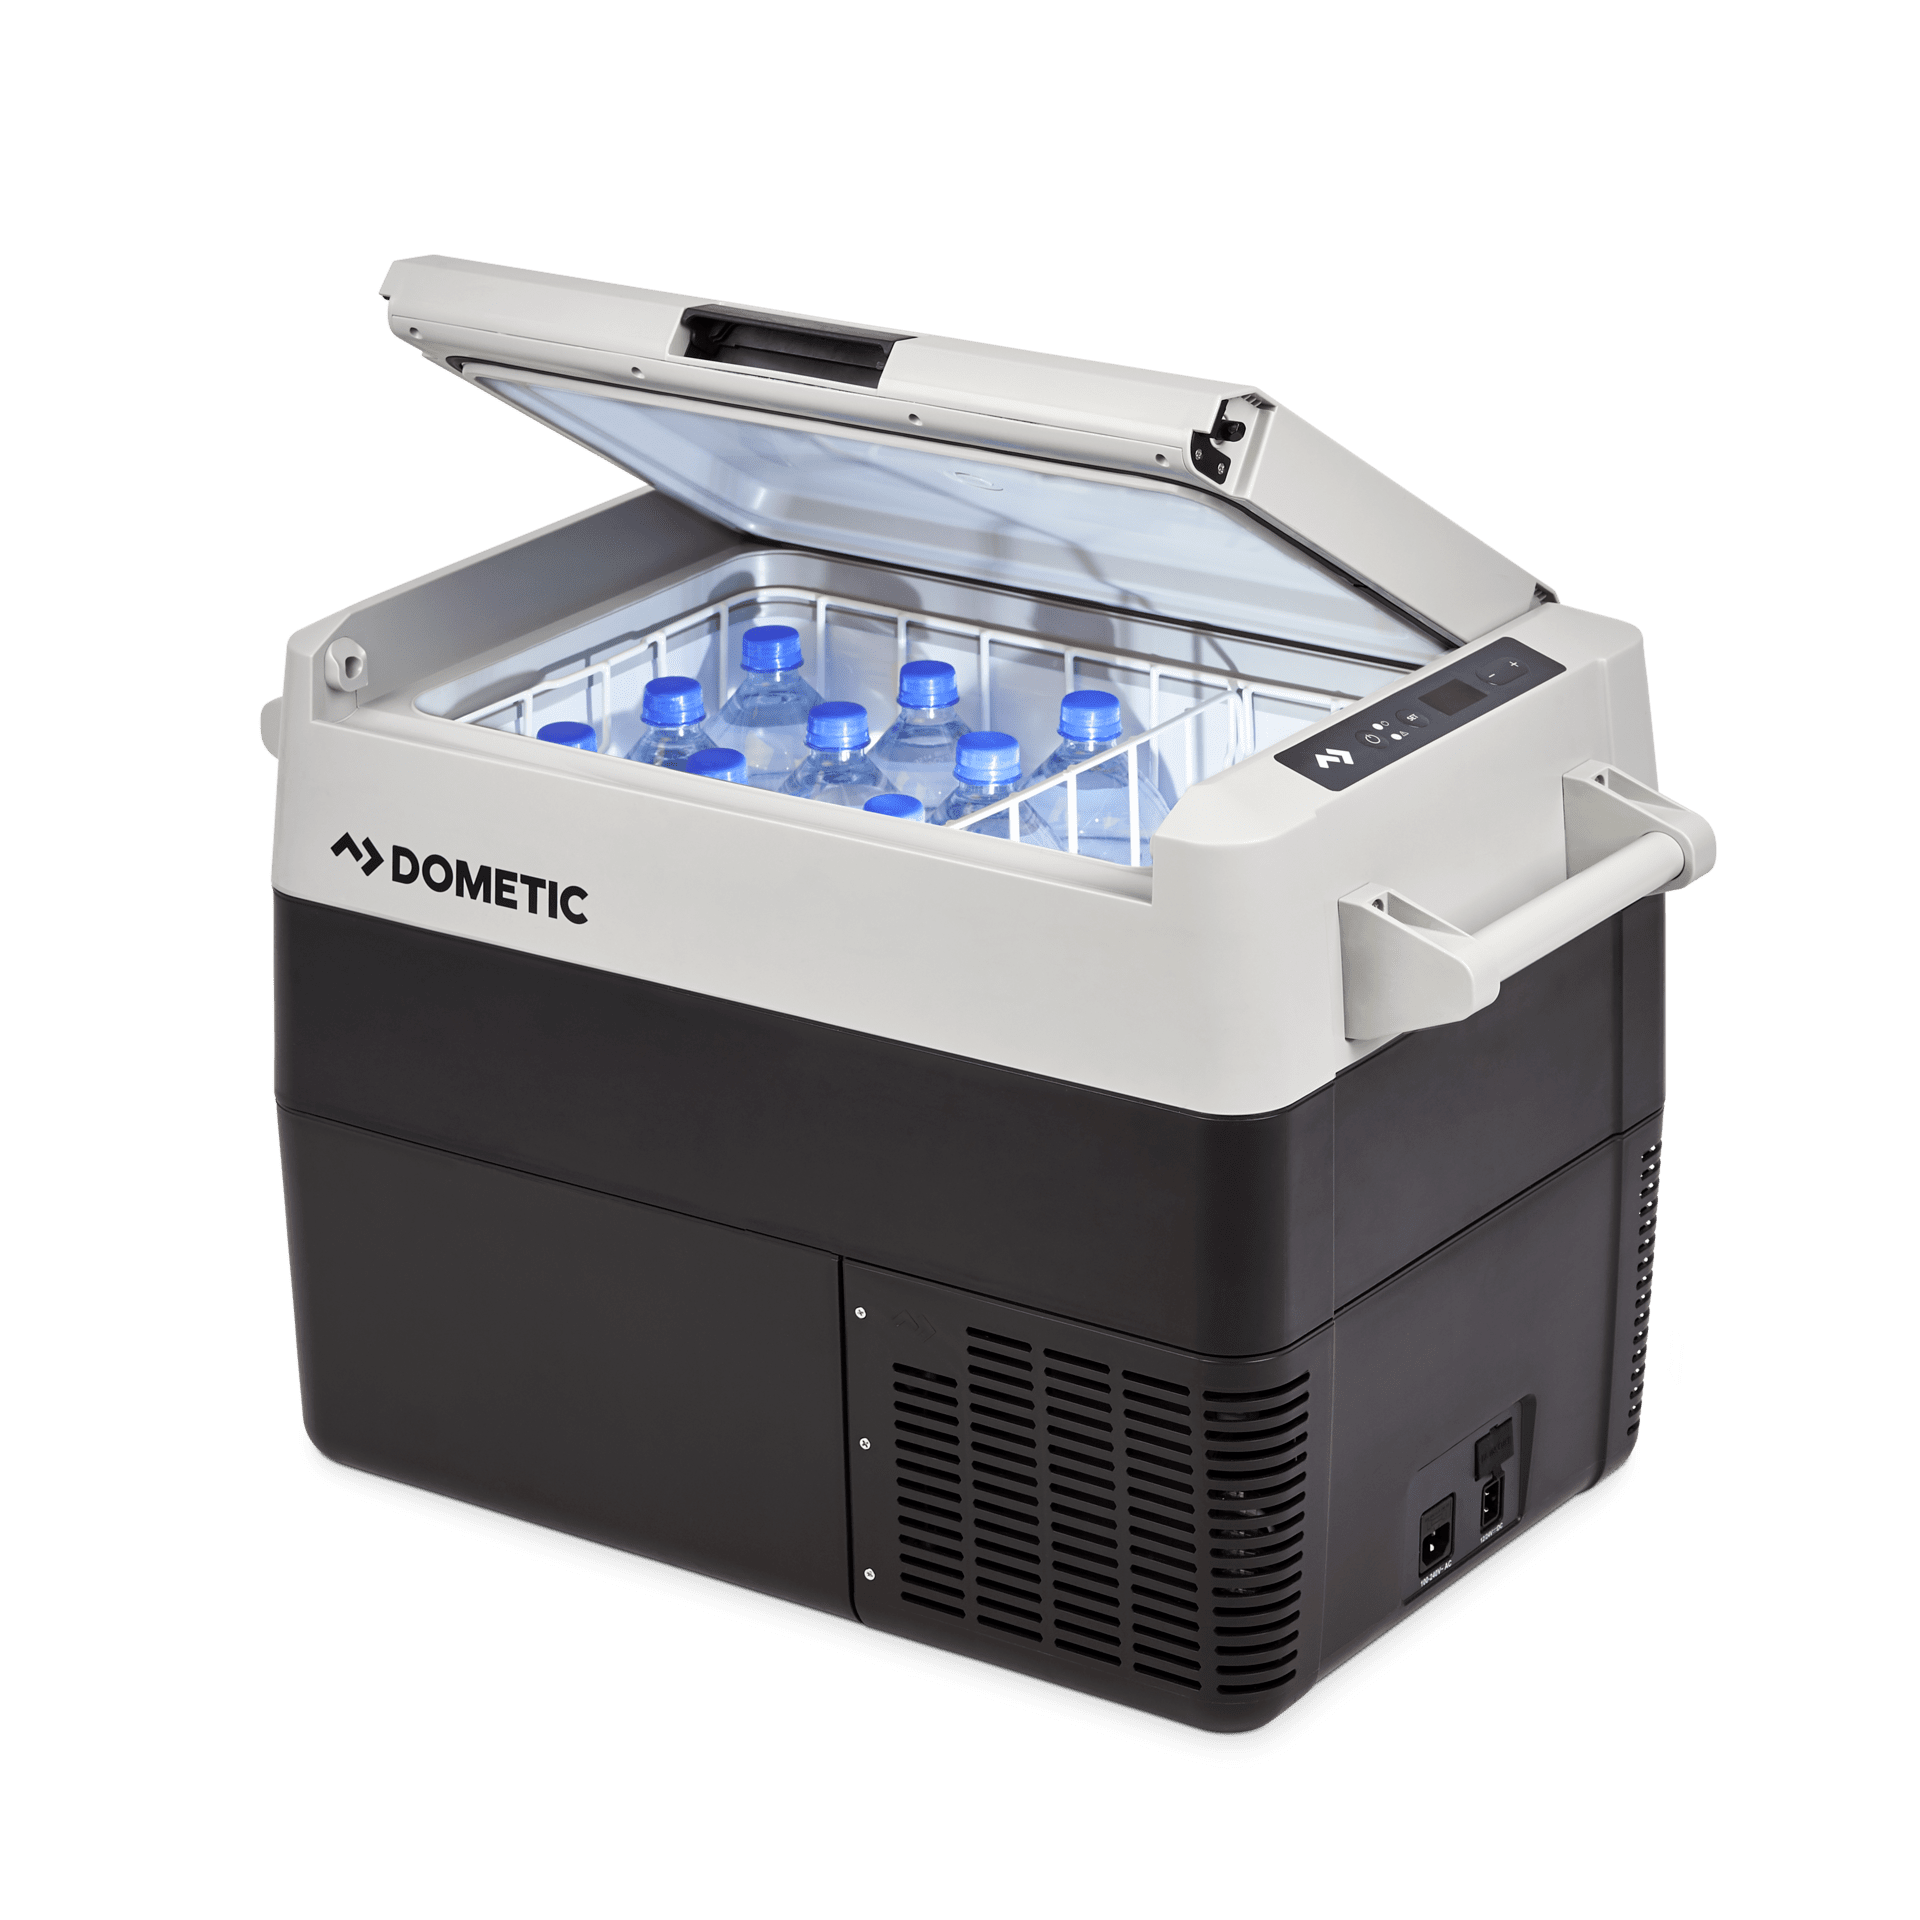 Dometic - Portable Fridge & Freezer Combo, Cooler, Ice maker